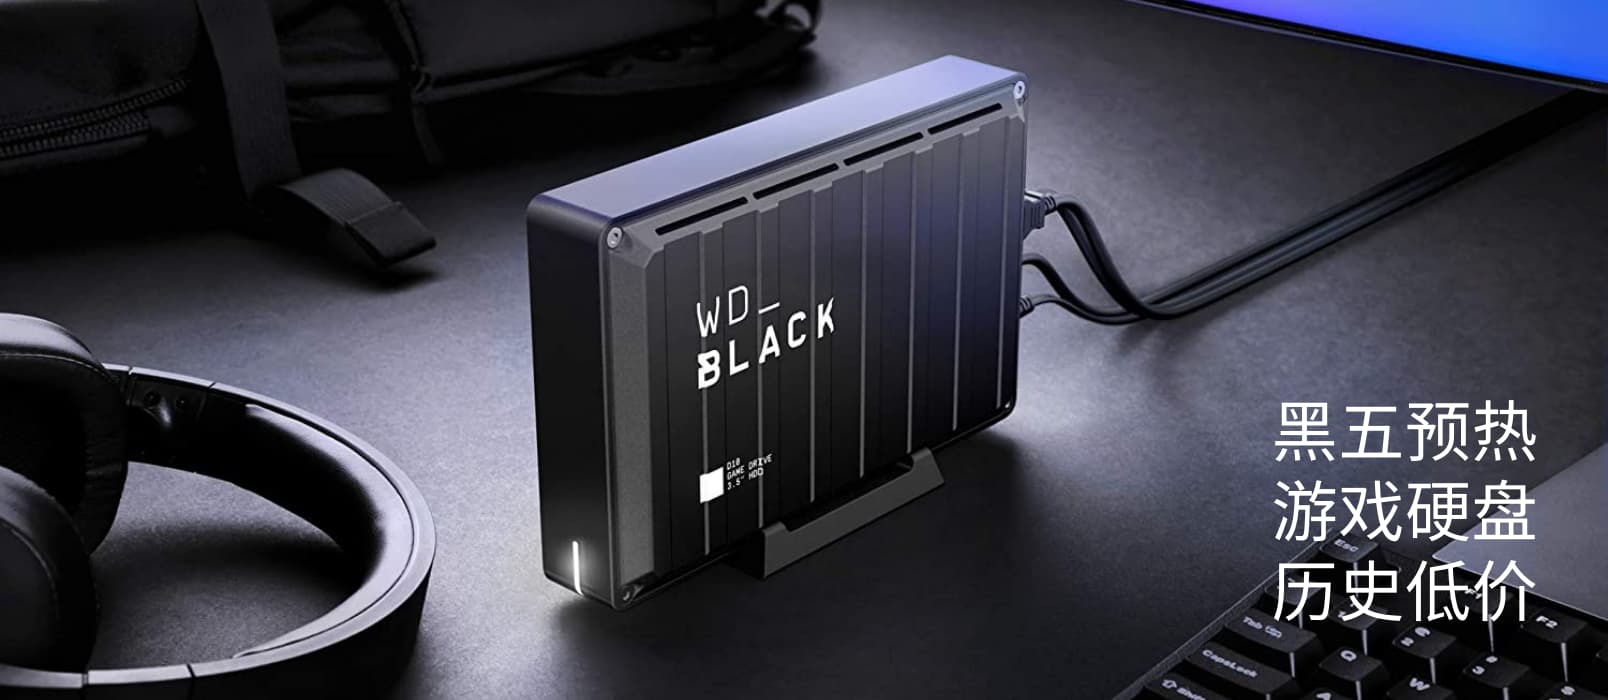 WD_BLACK D10 8TB 游戏硬盘历史低价